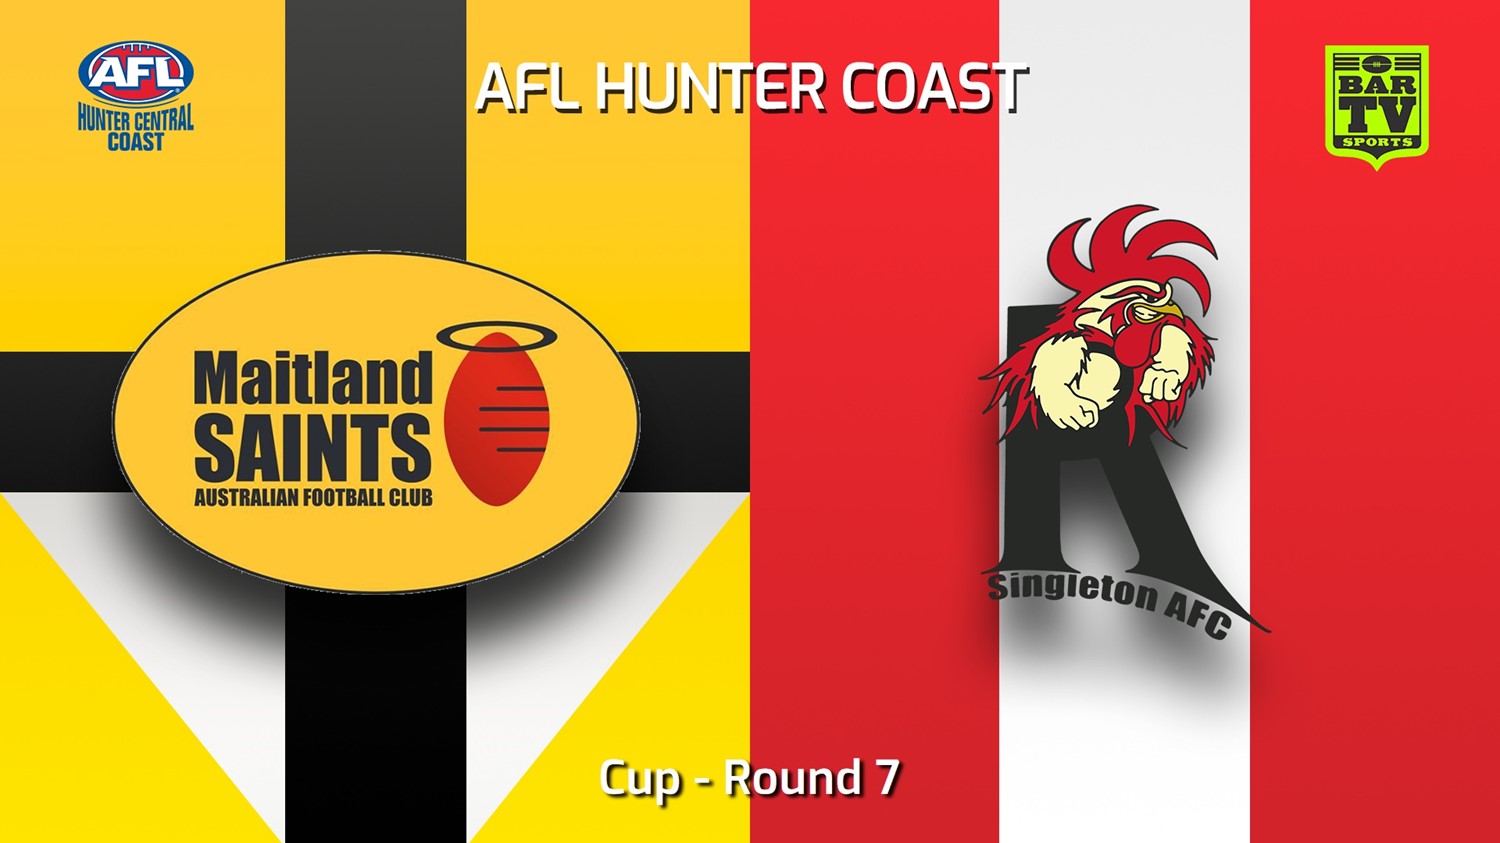 230520-AFL Hunter Central Coast Round 7 - Cup - Maitland Saints v Singleton Roosters Minigame Slate Image